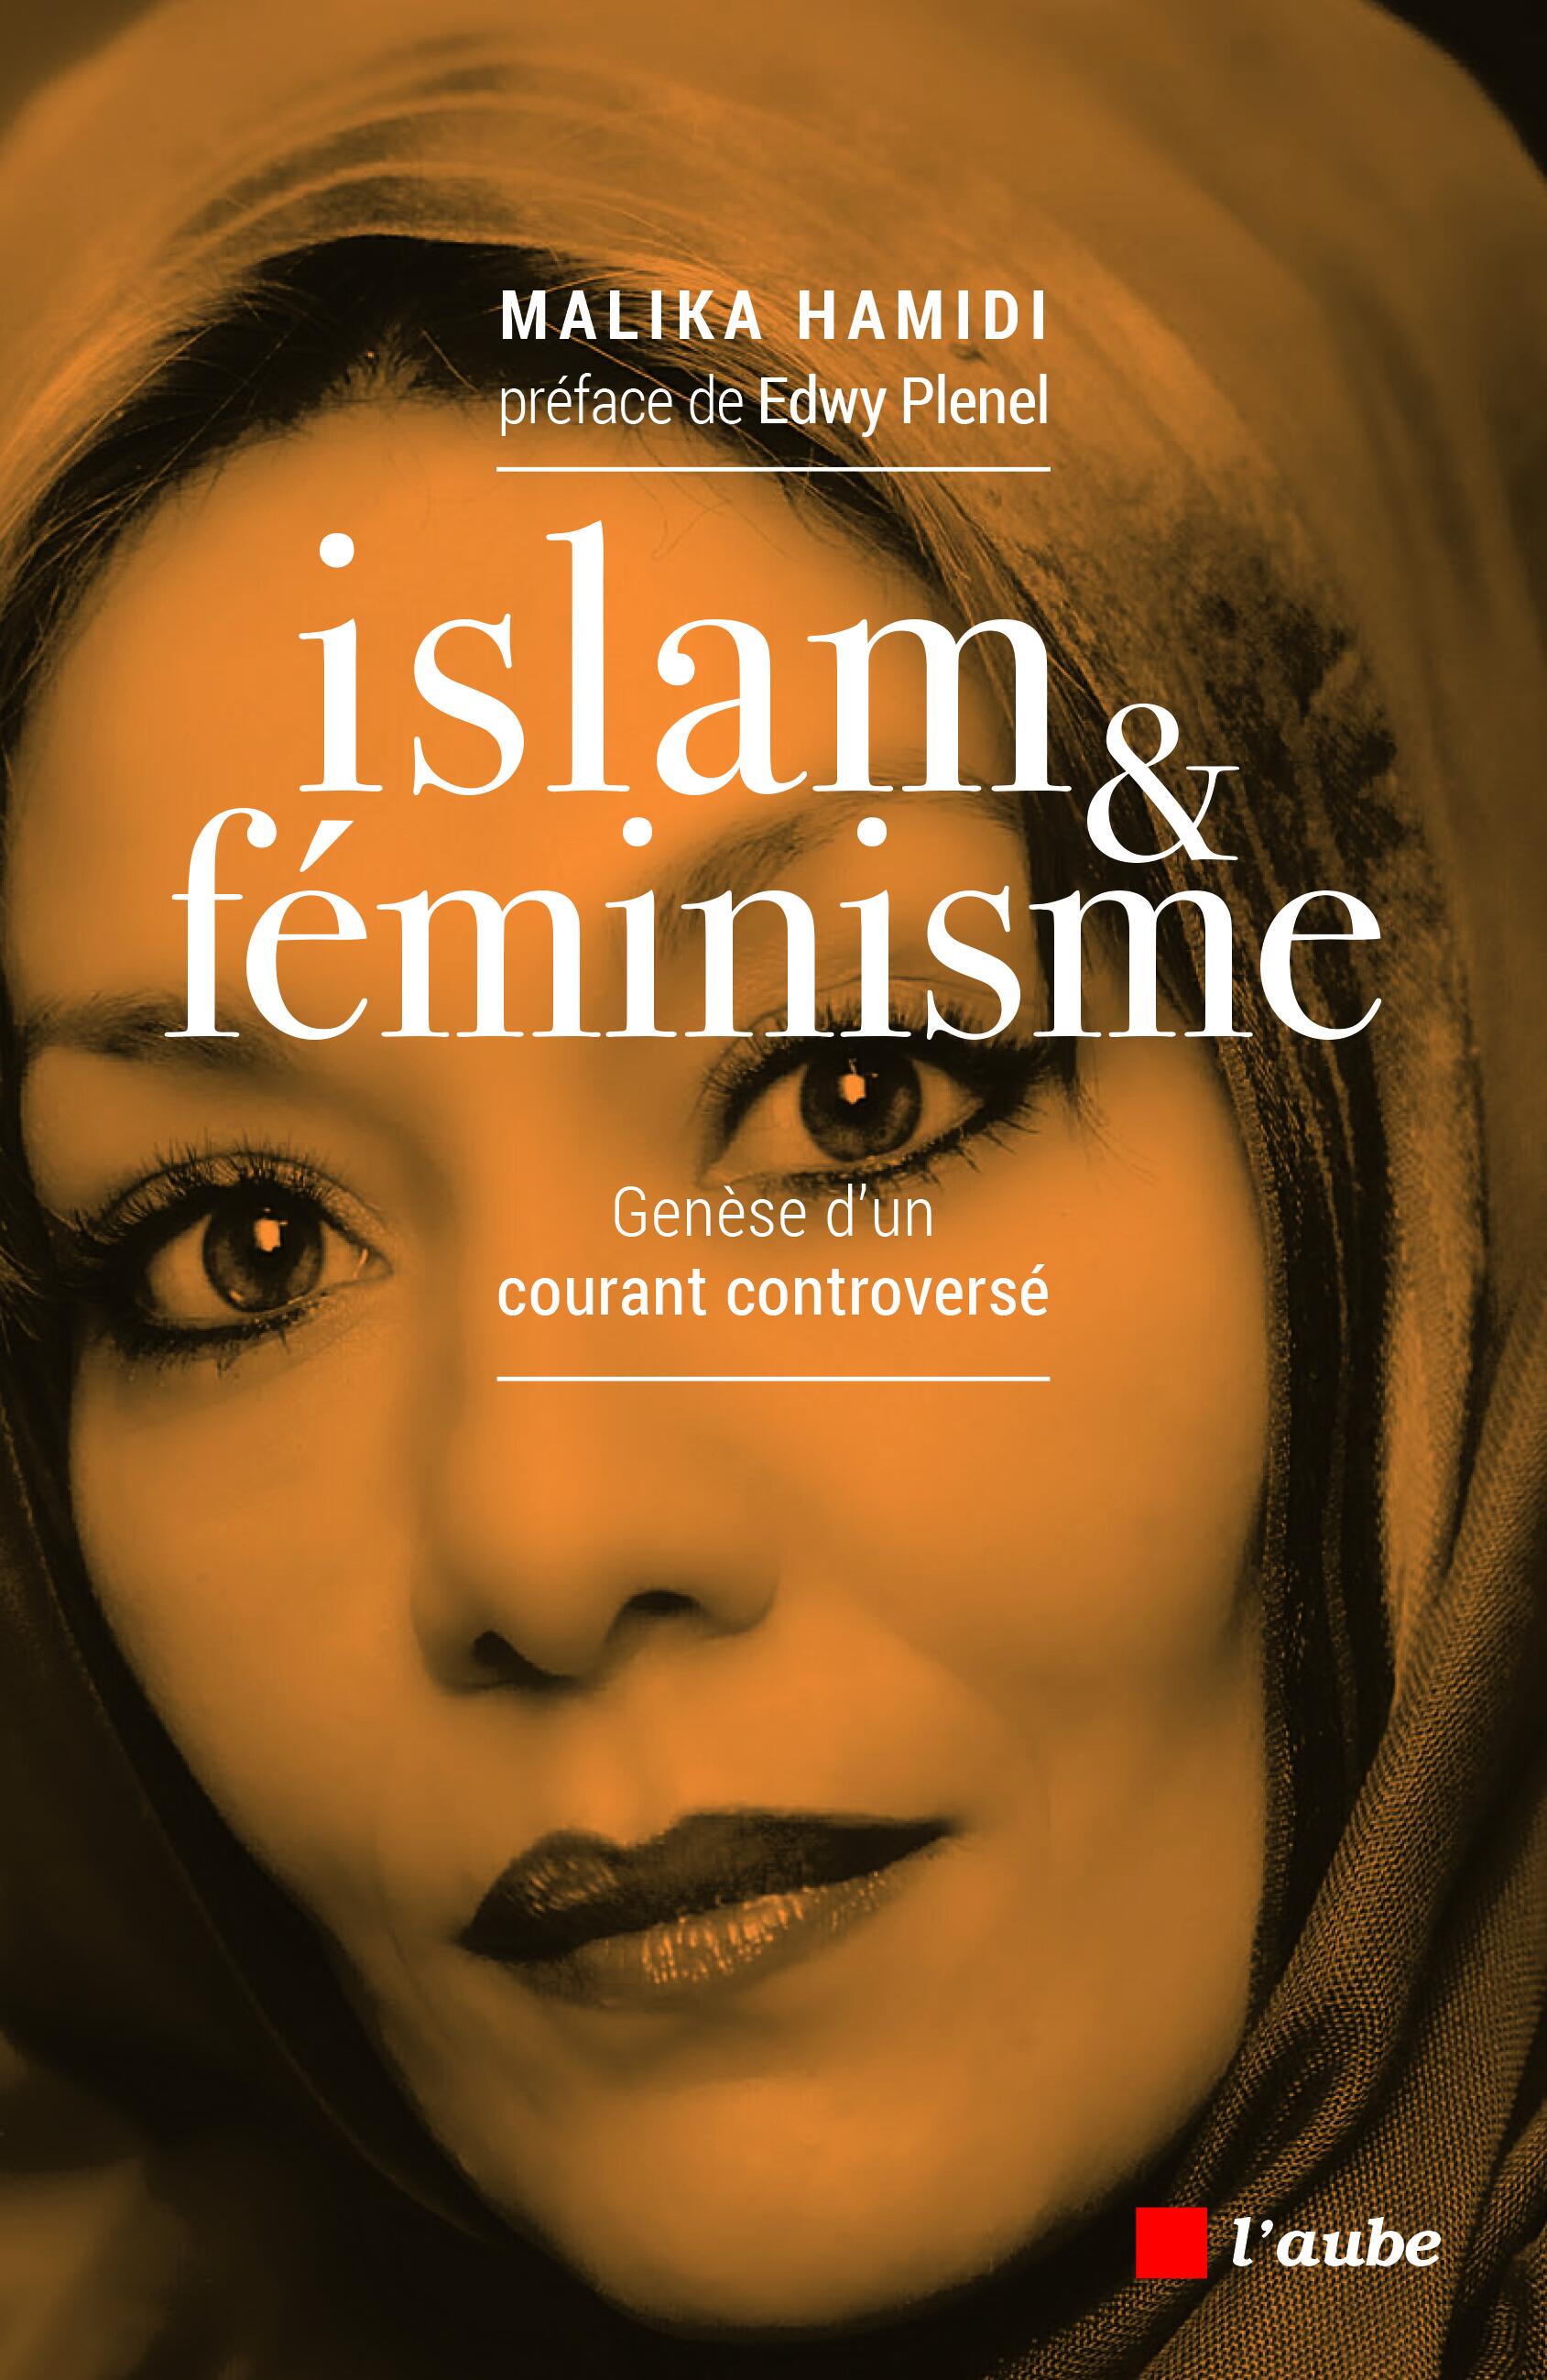 Islam and feminism